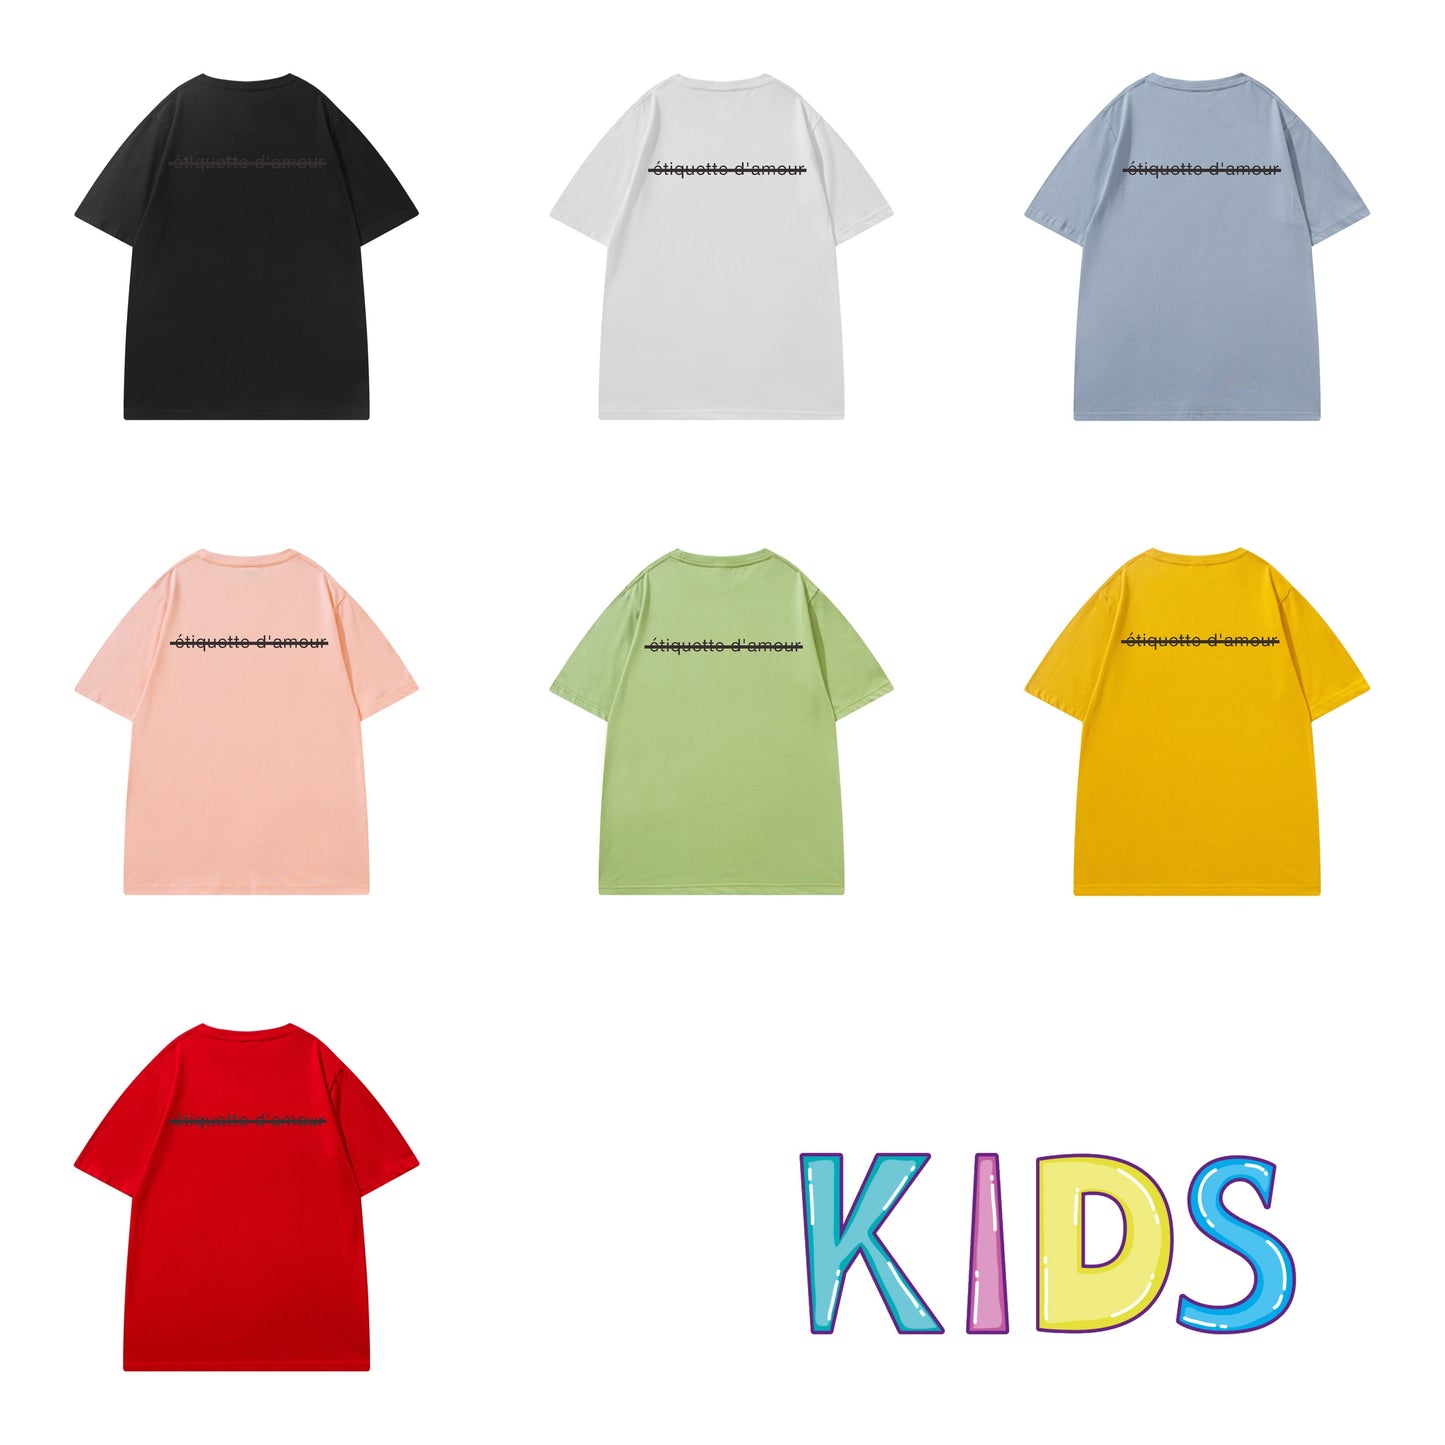 Etiquette Child T-Shirt - 0031 Money Brand Bear